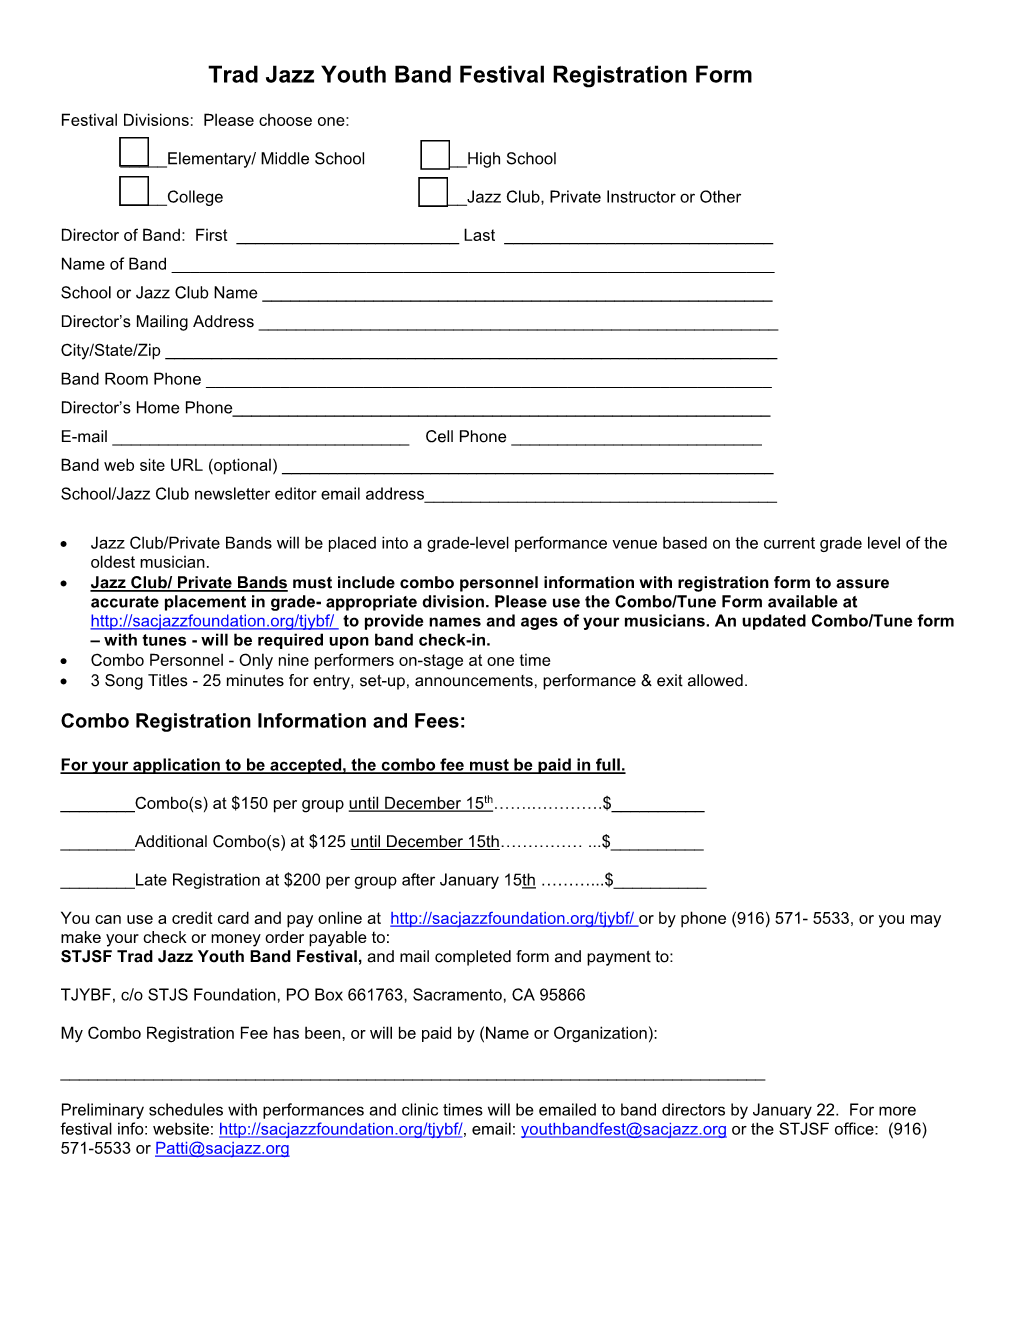 Trad Jazz Youth Band Festival Registration Form